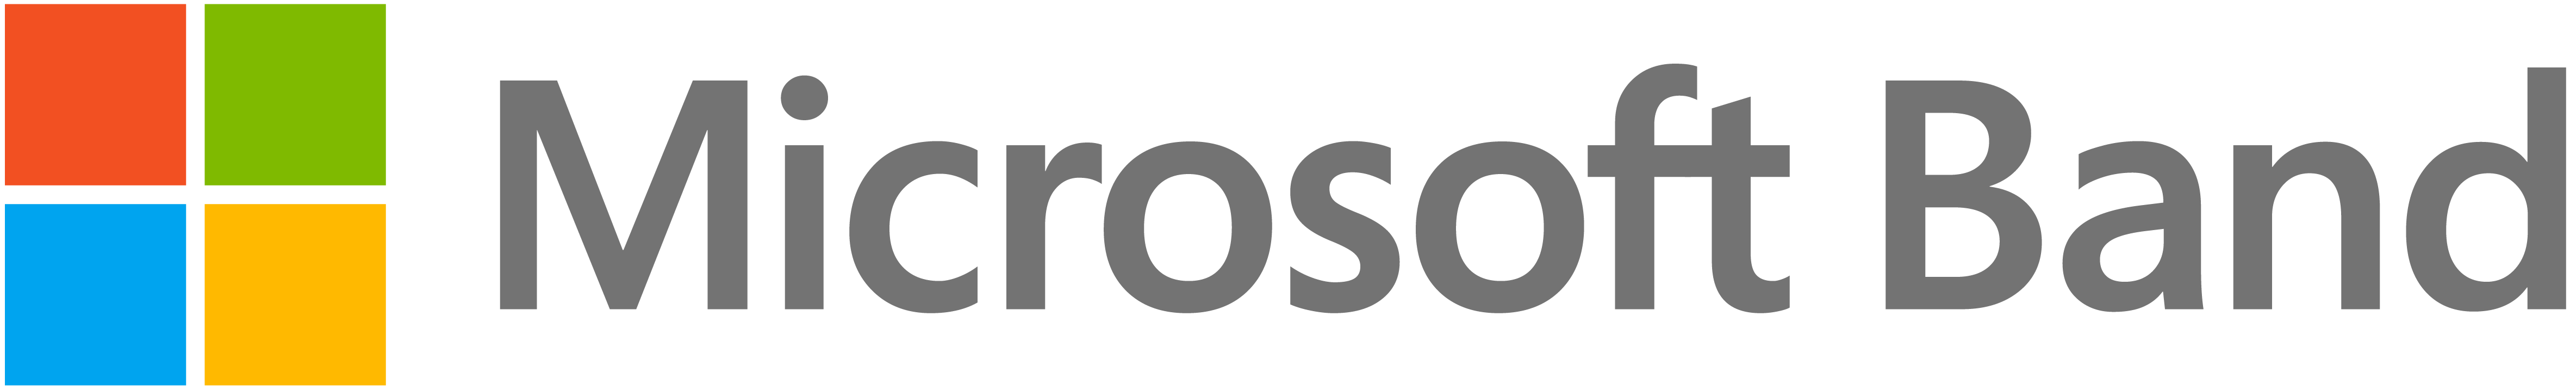 Microsoft logo PNG images 